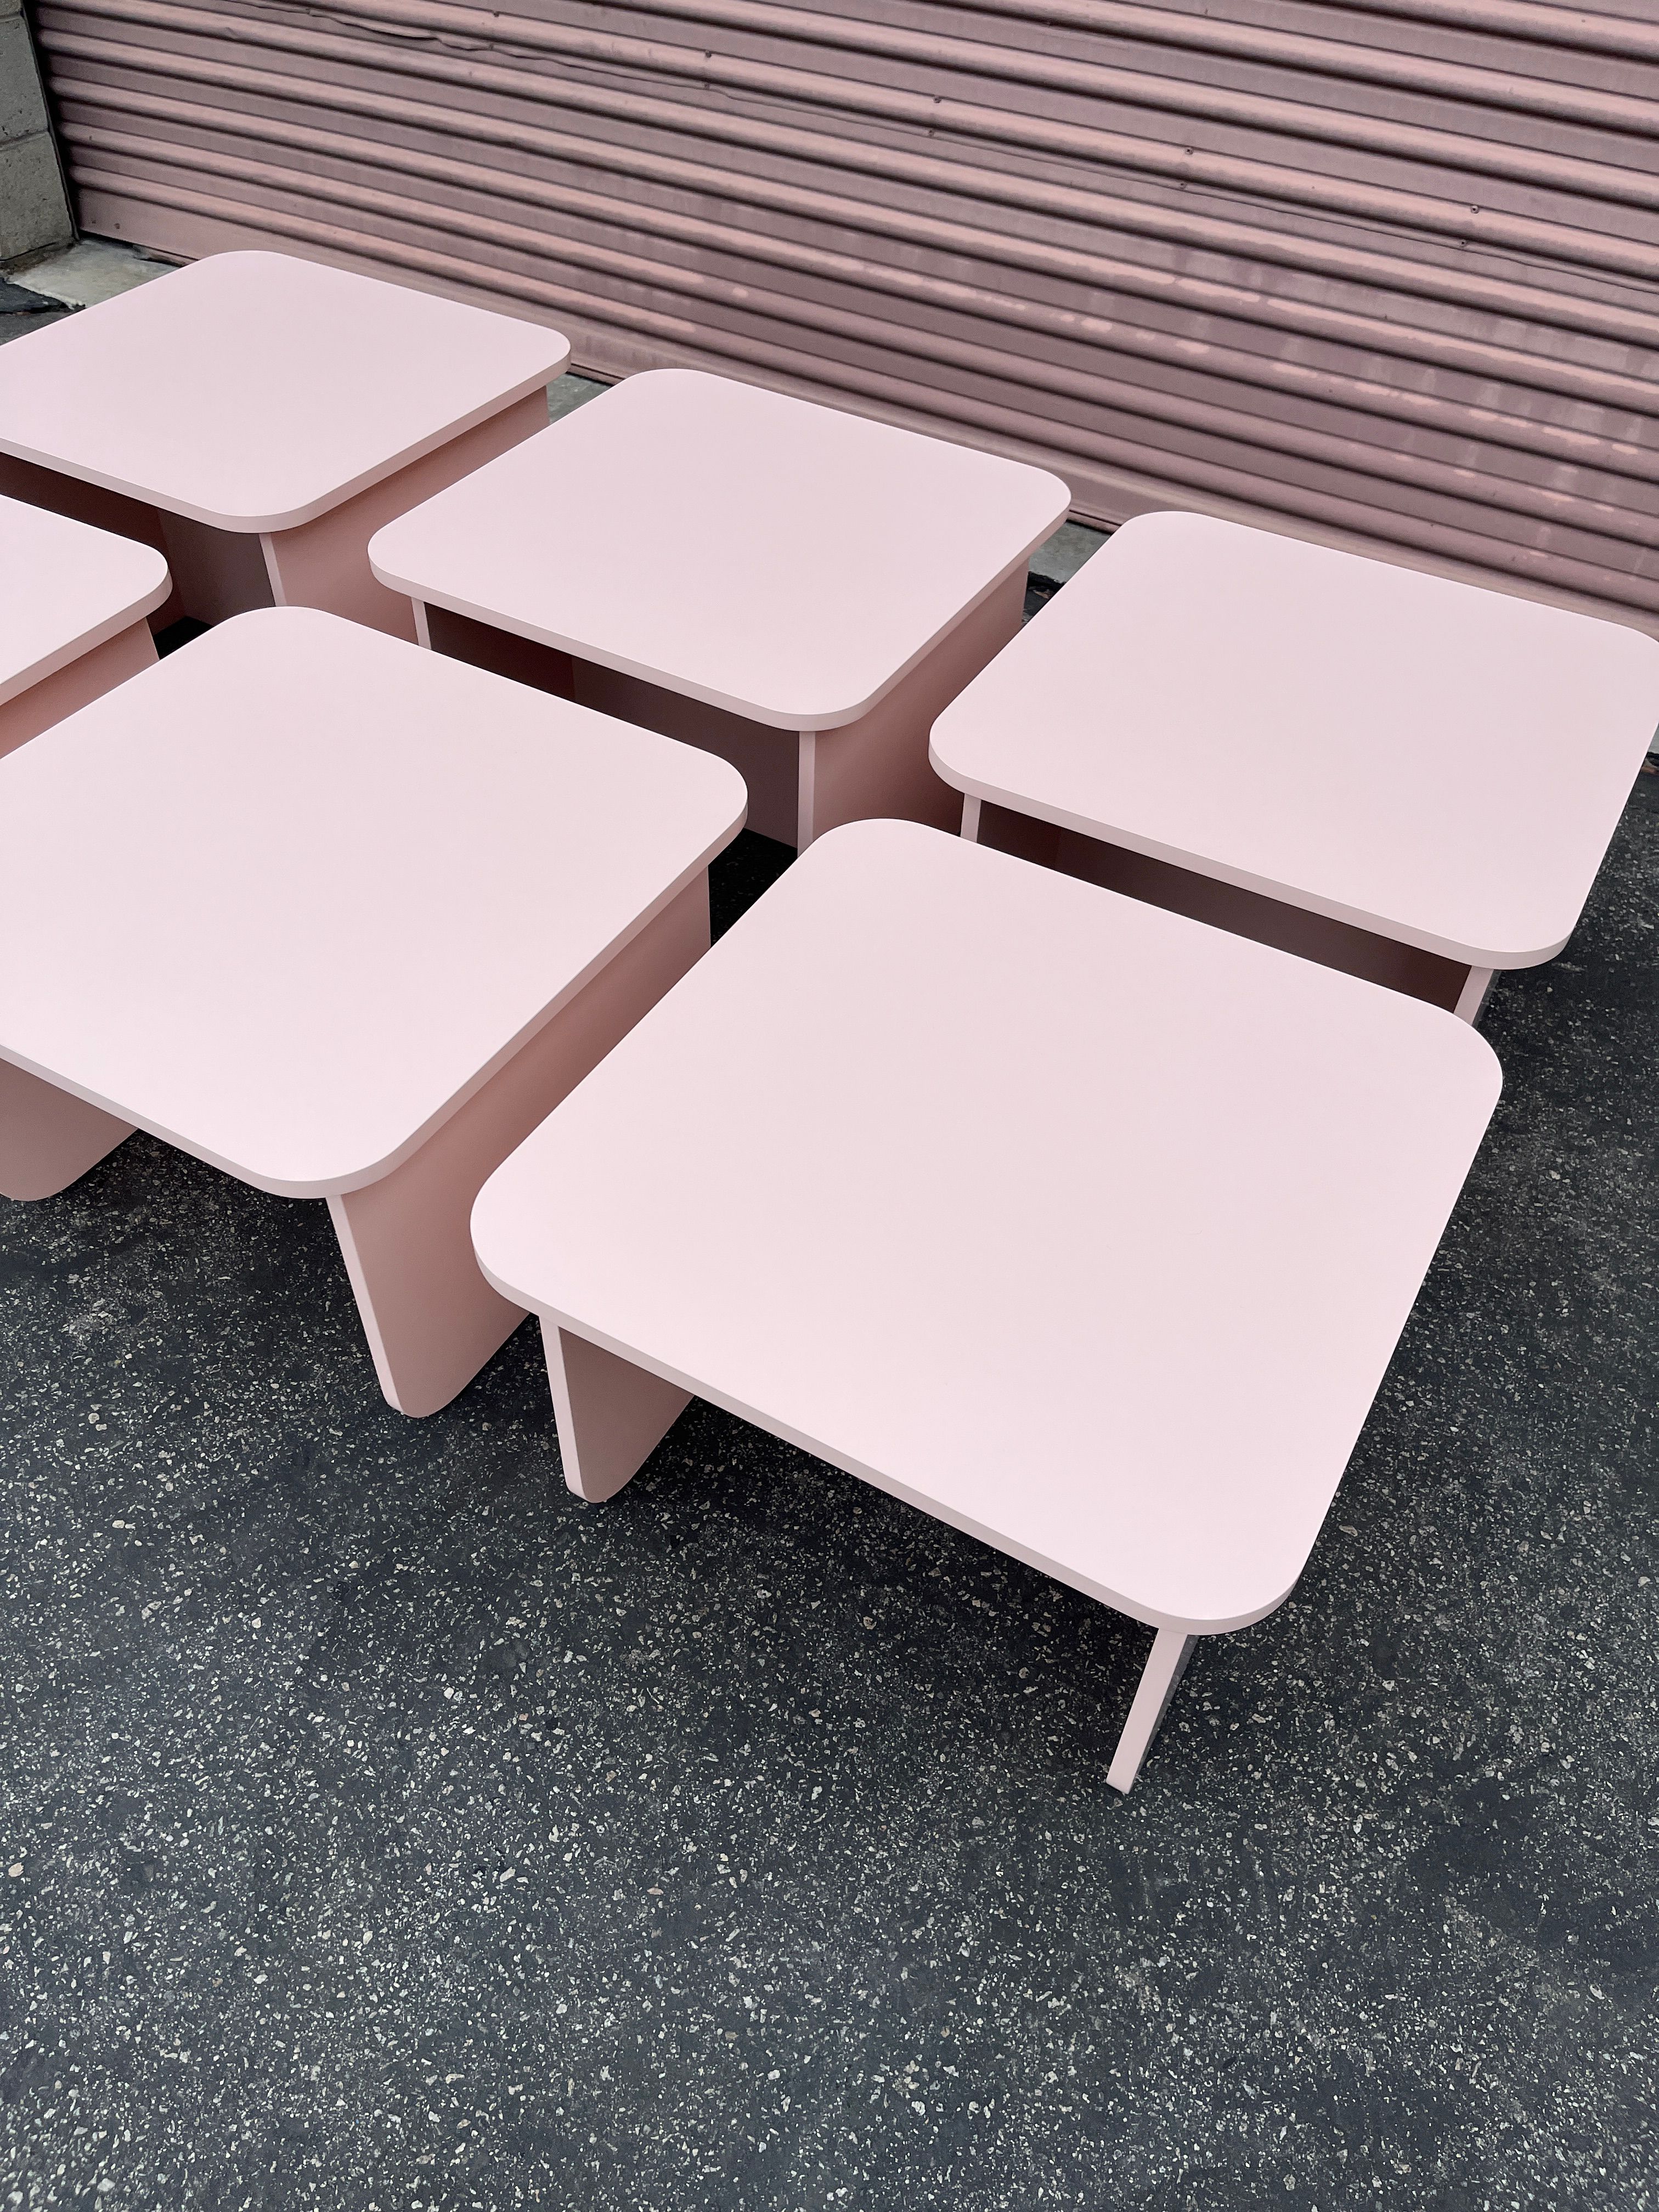  Square Side Tables - Buck LA product image 6